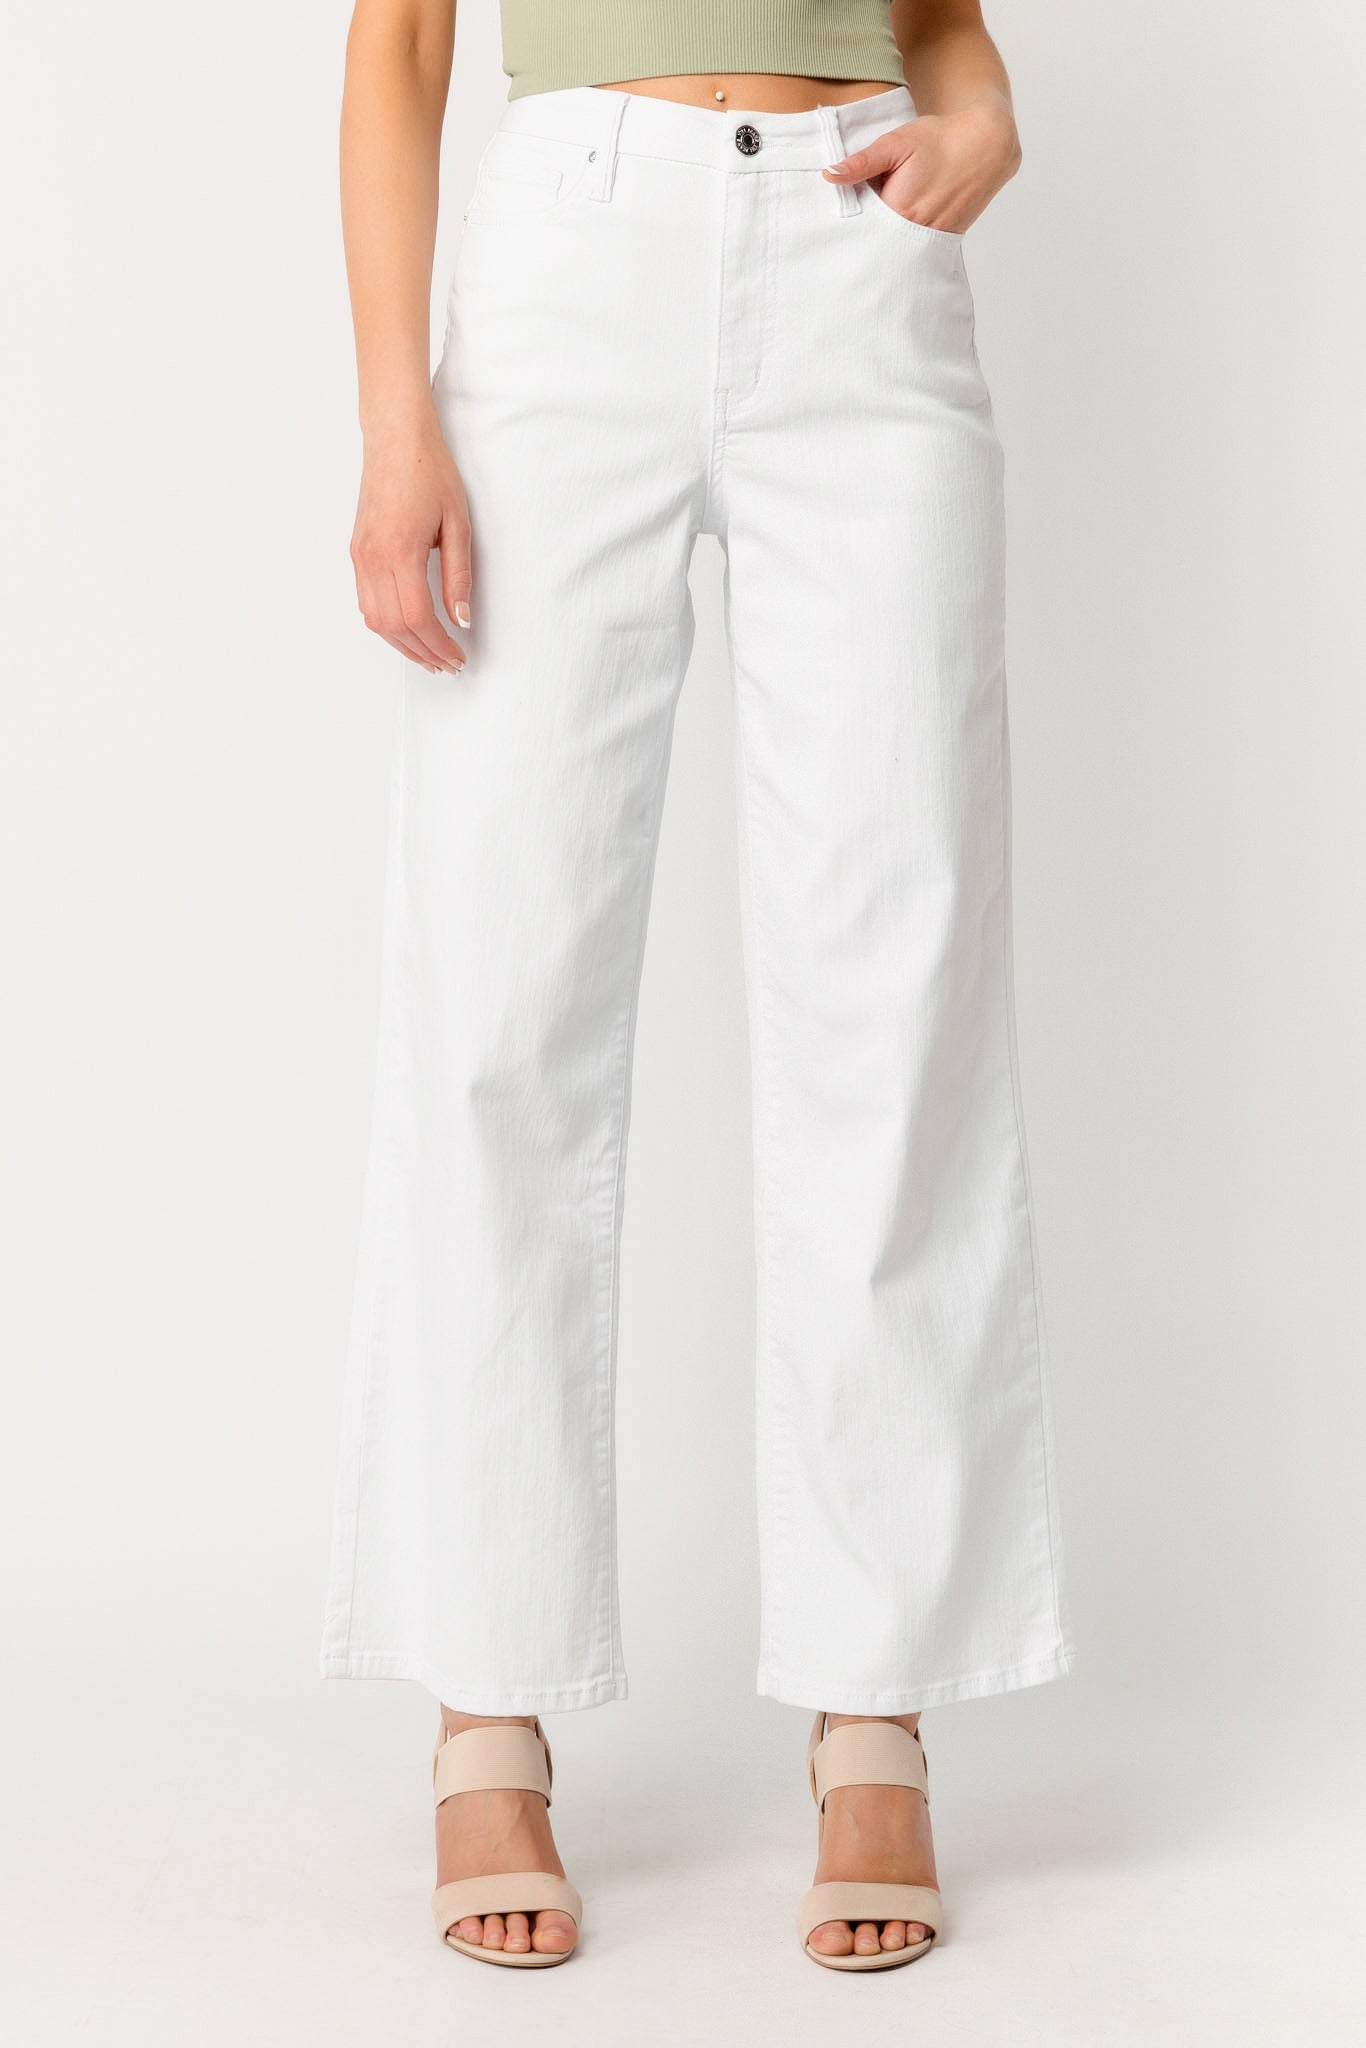 YMI White Curvy High-Rise Wide Leg Jean